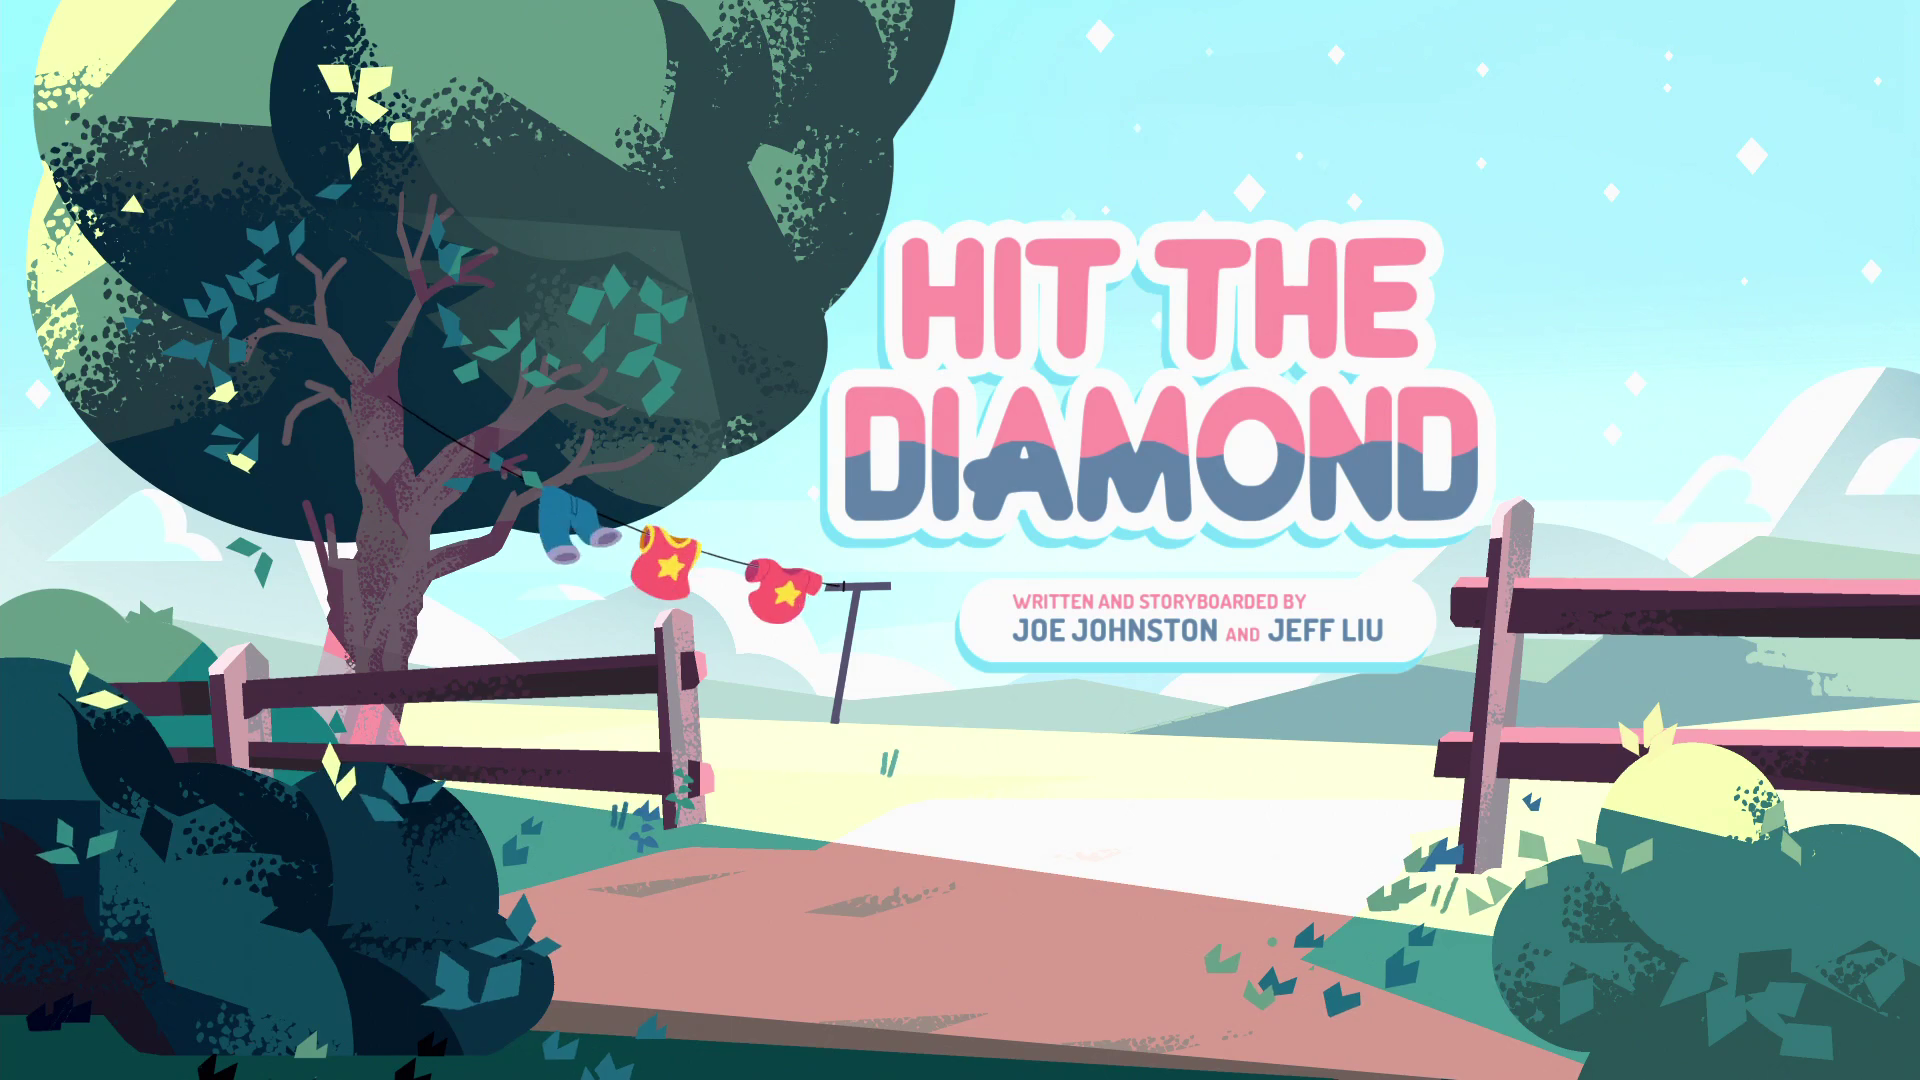 Steven Universe S3 Ep 5 ‘Hit the Diamond’ – Review